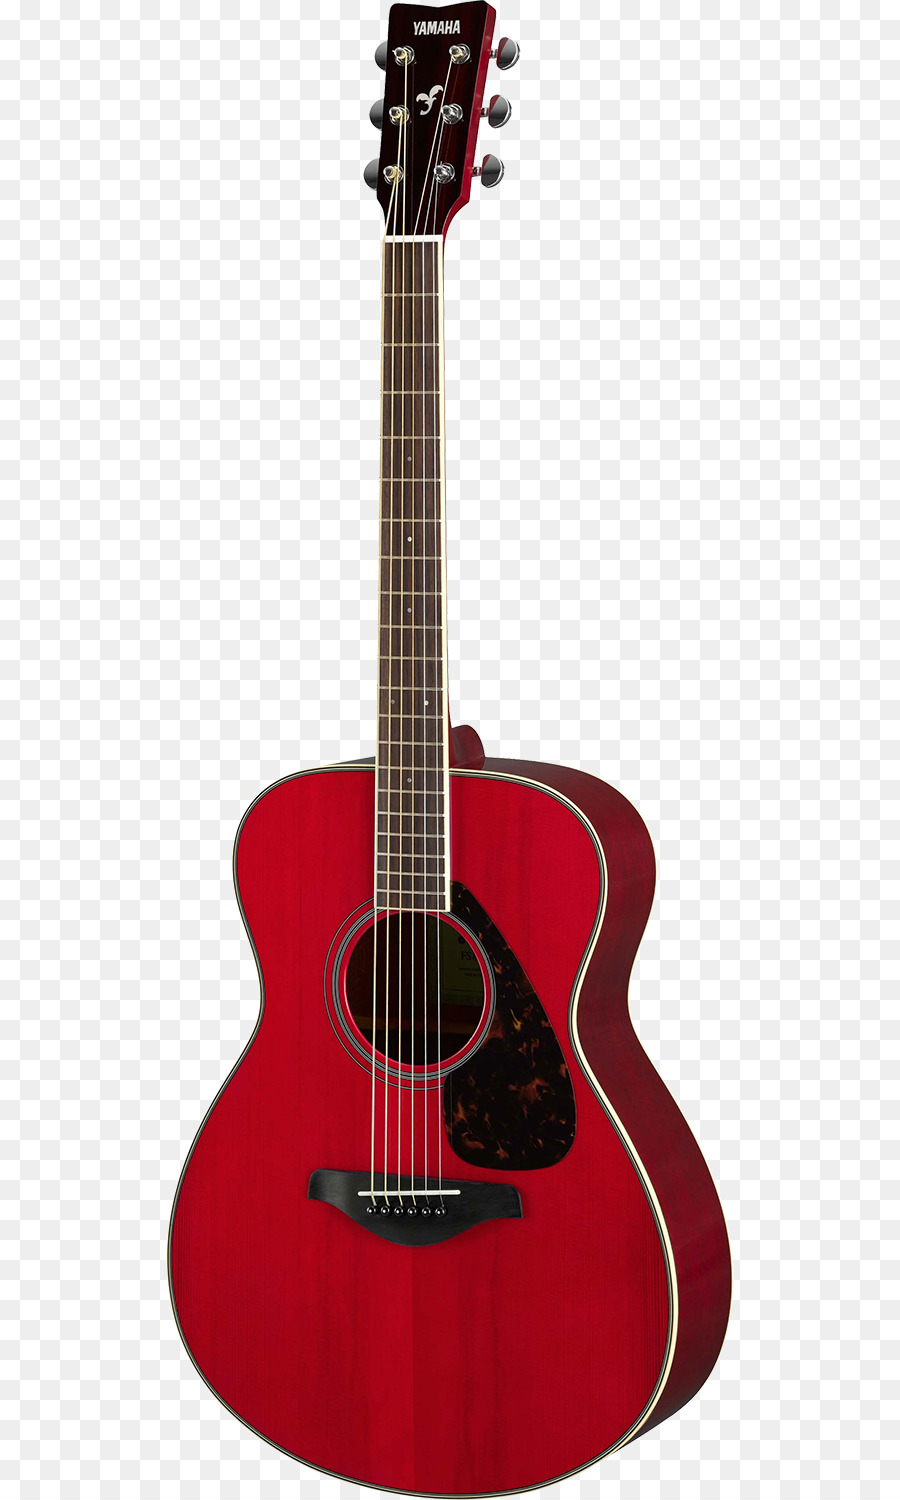 Yamaha FG820 Acoustic Guitar Yamaha FG830 Steel-string acoustic guitar - guitar black and white png download - 568*1500 - Free Transparent Yamaha Fg820 Acoustic Guitar png Download.